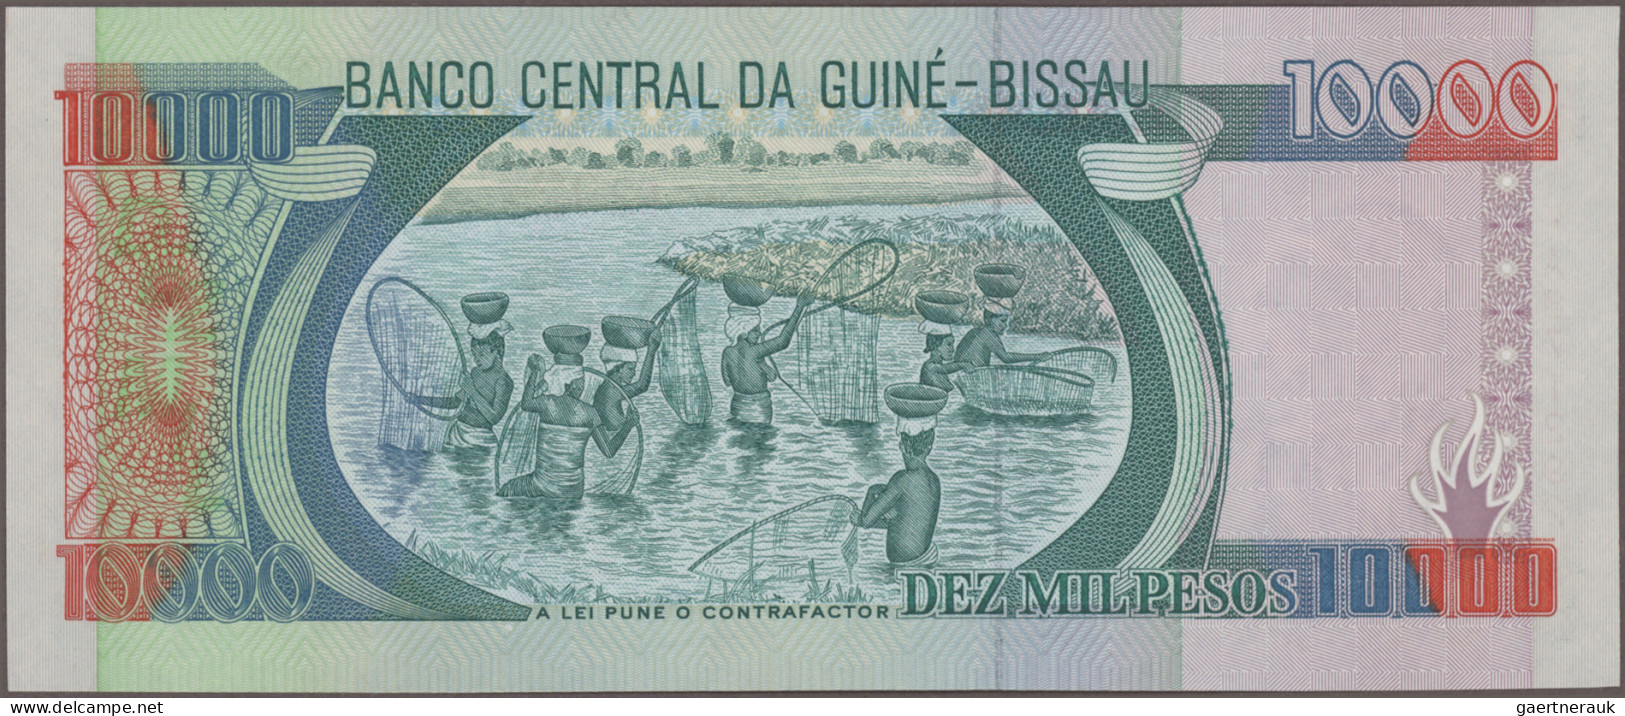 Guinea Bissau: Banco Nacional da Guiné-Bissau, lot with 9 banknotes, series 1978